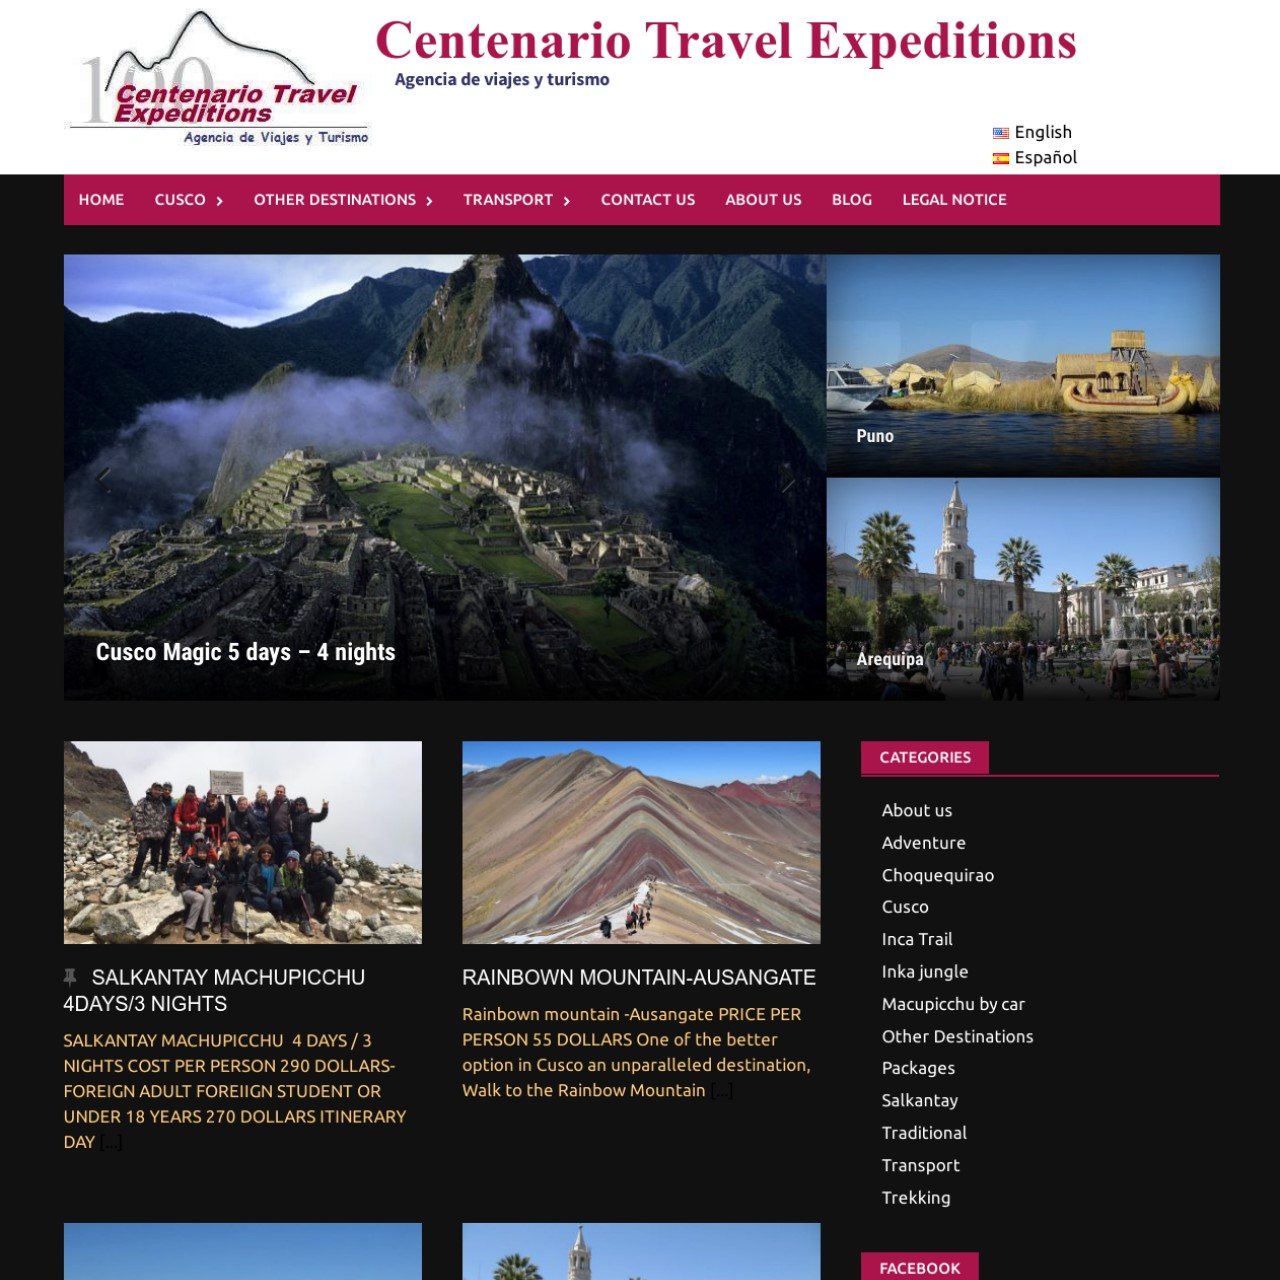 Centenario Travel Expeditions